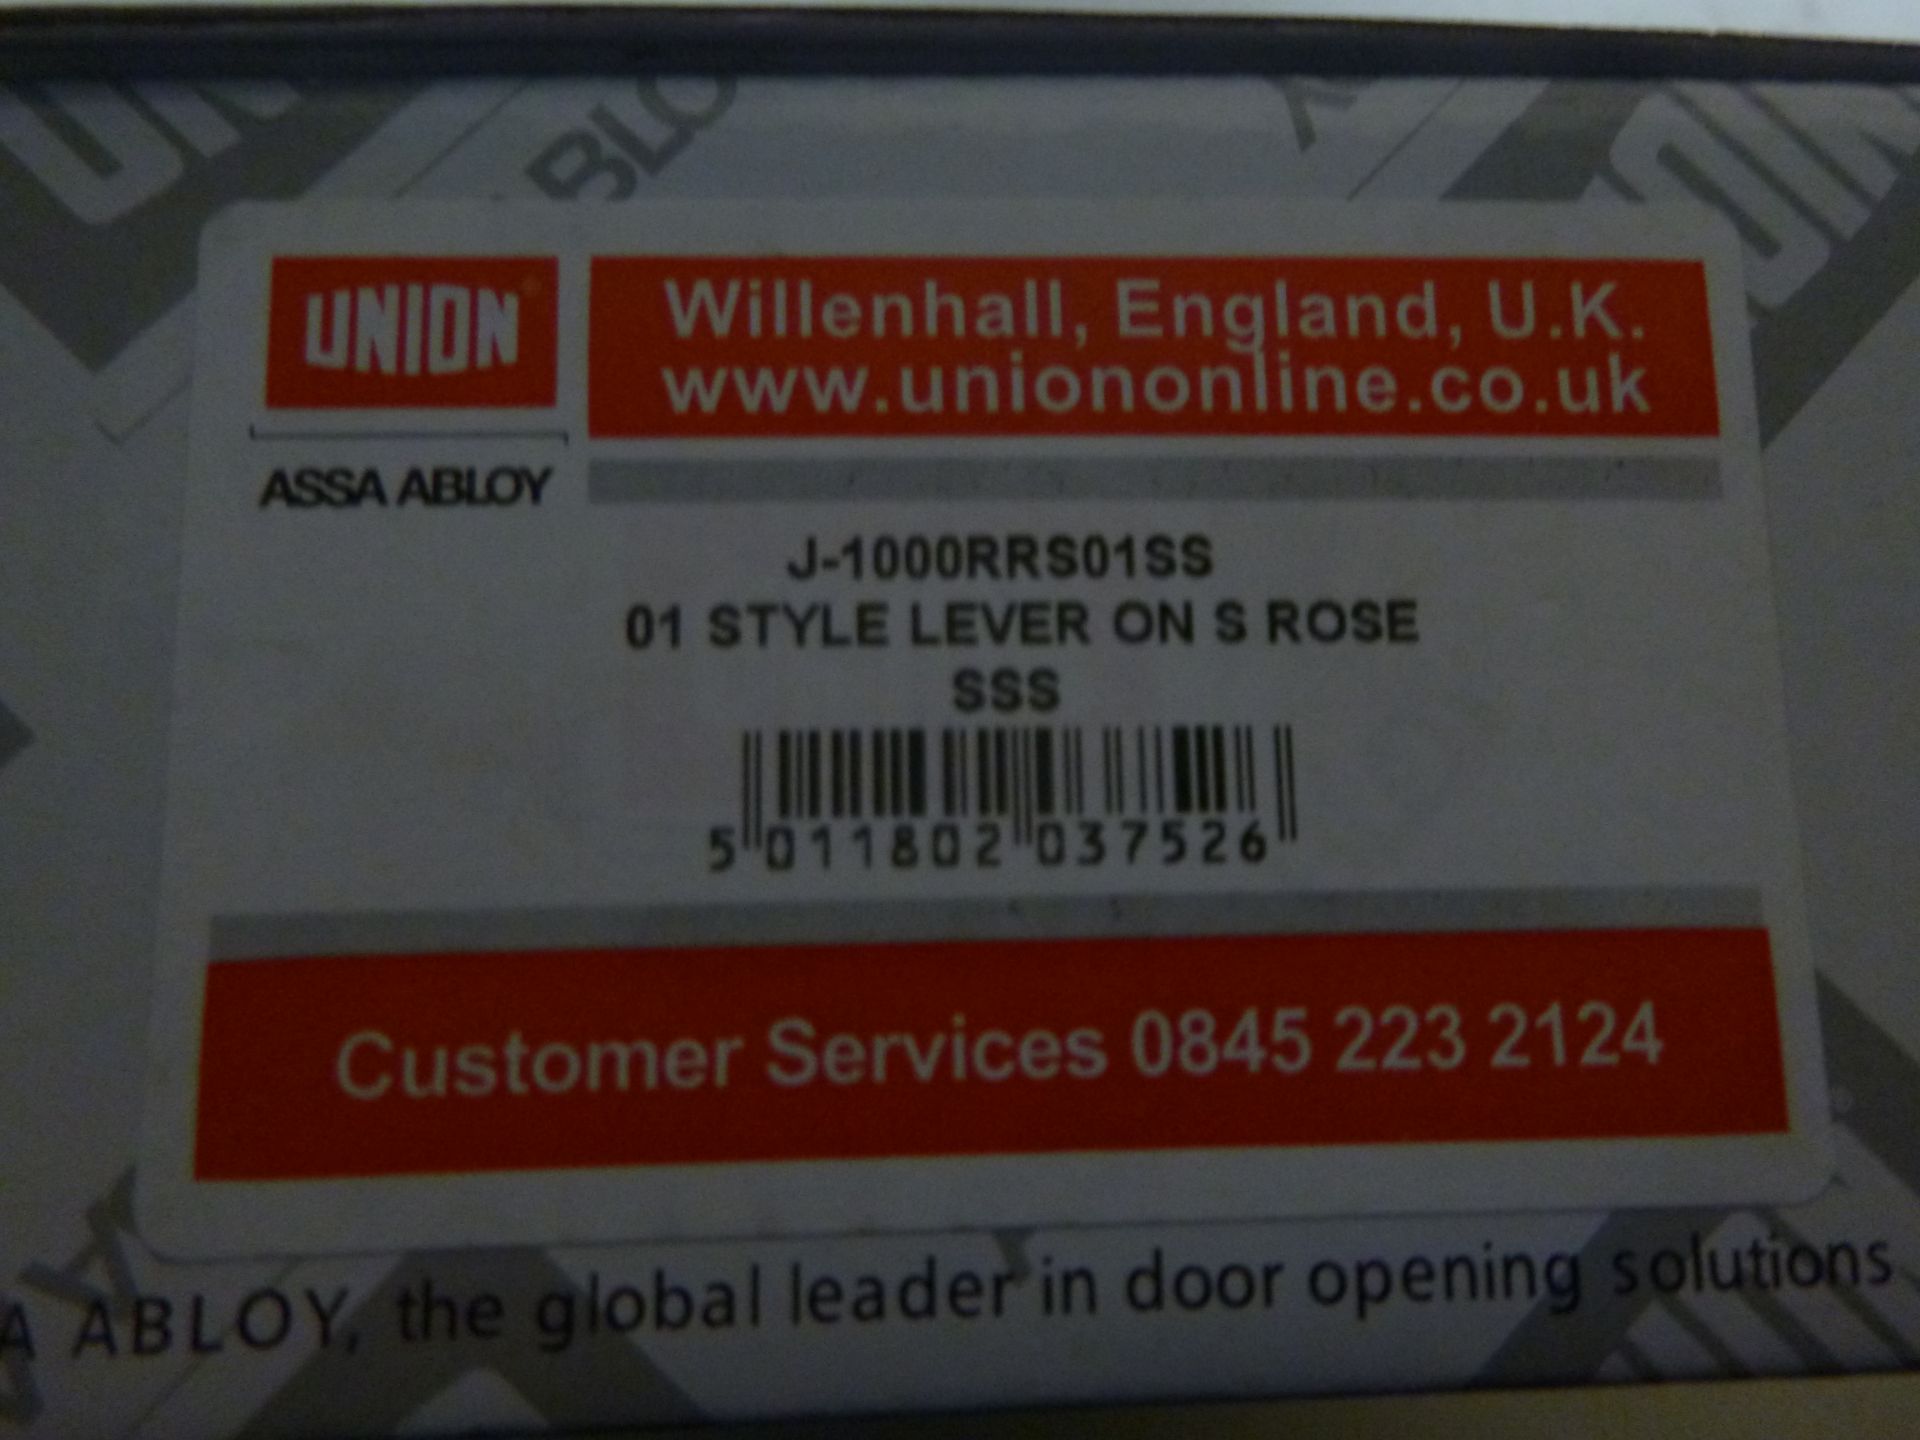 11 x ASSA ABLOY Door Handle Set w/ Fittings | EAN: 5011802037526 | RRP £220 - Image 2 of 2